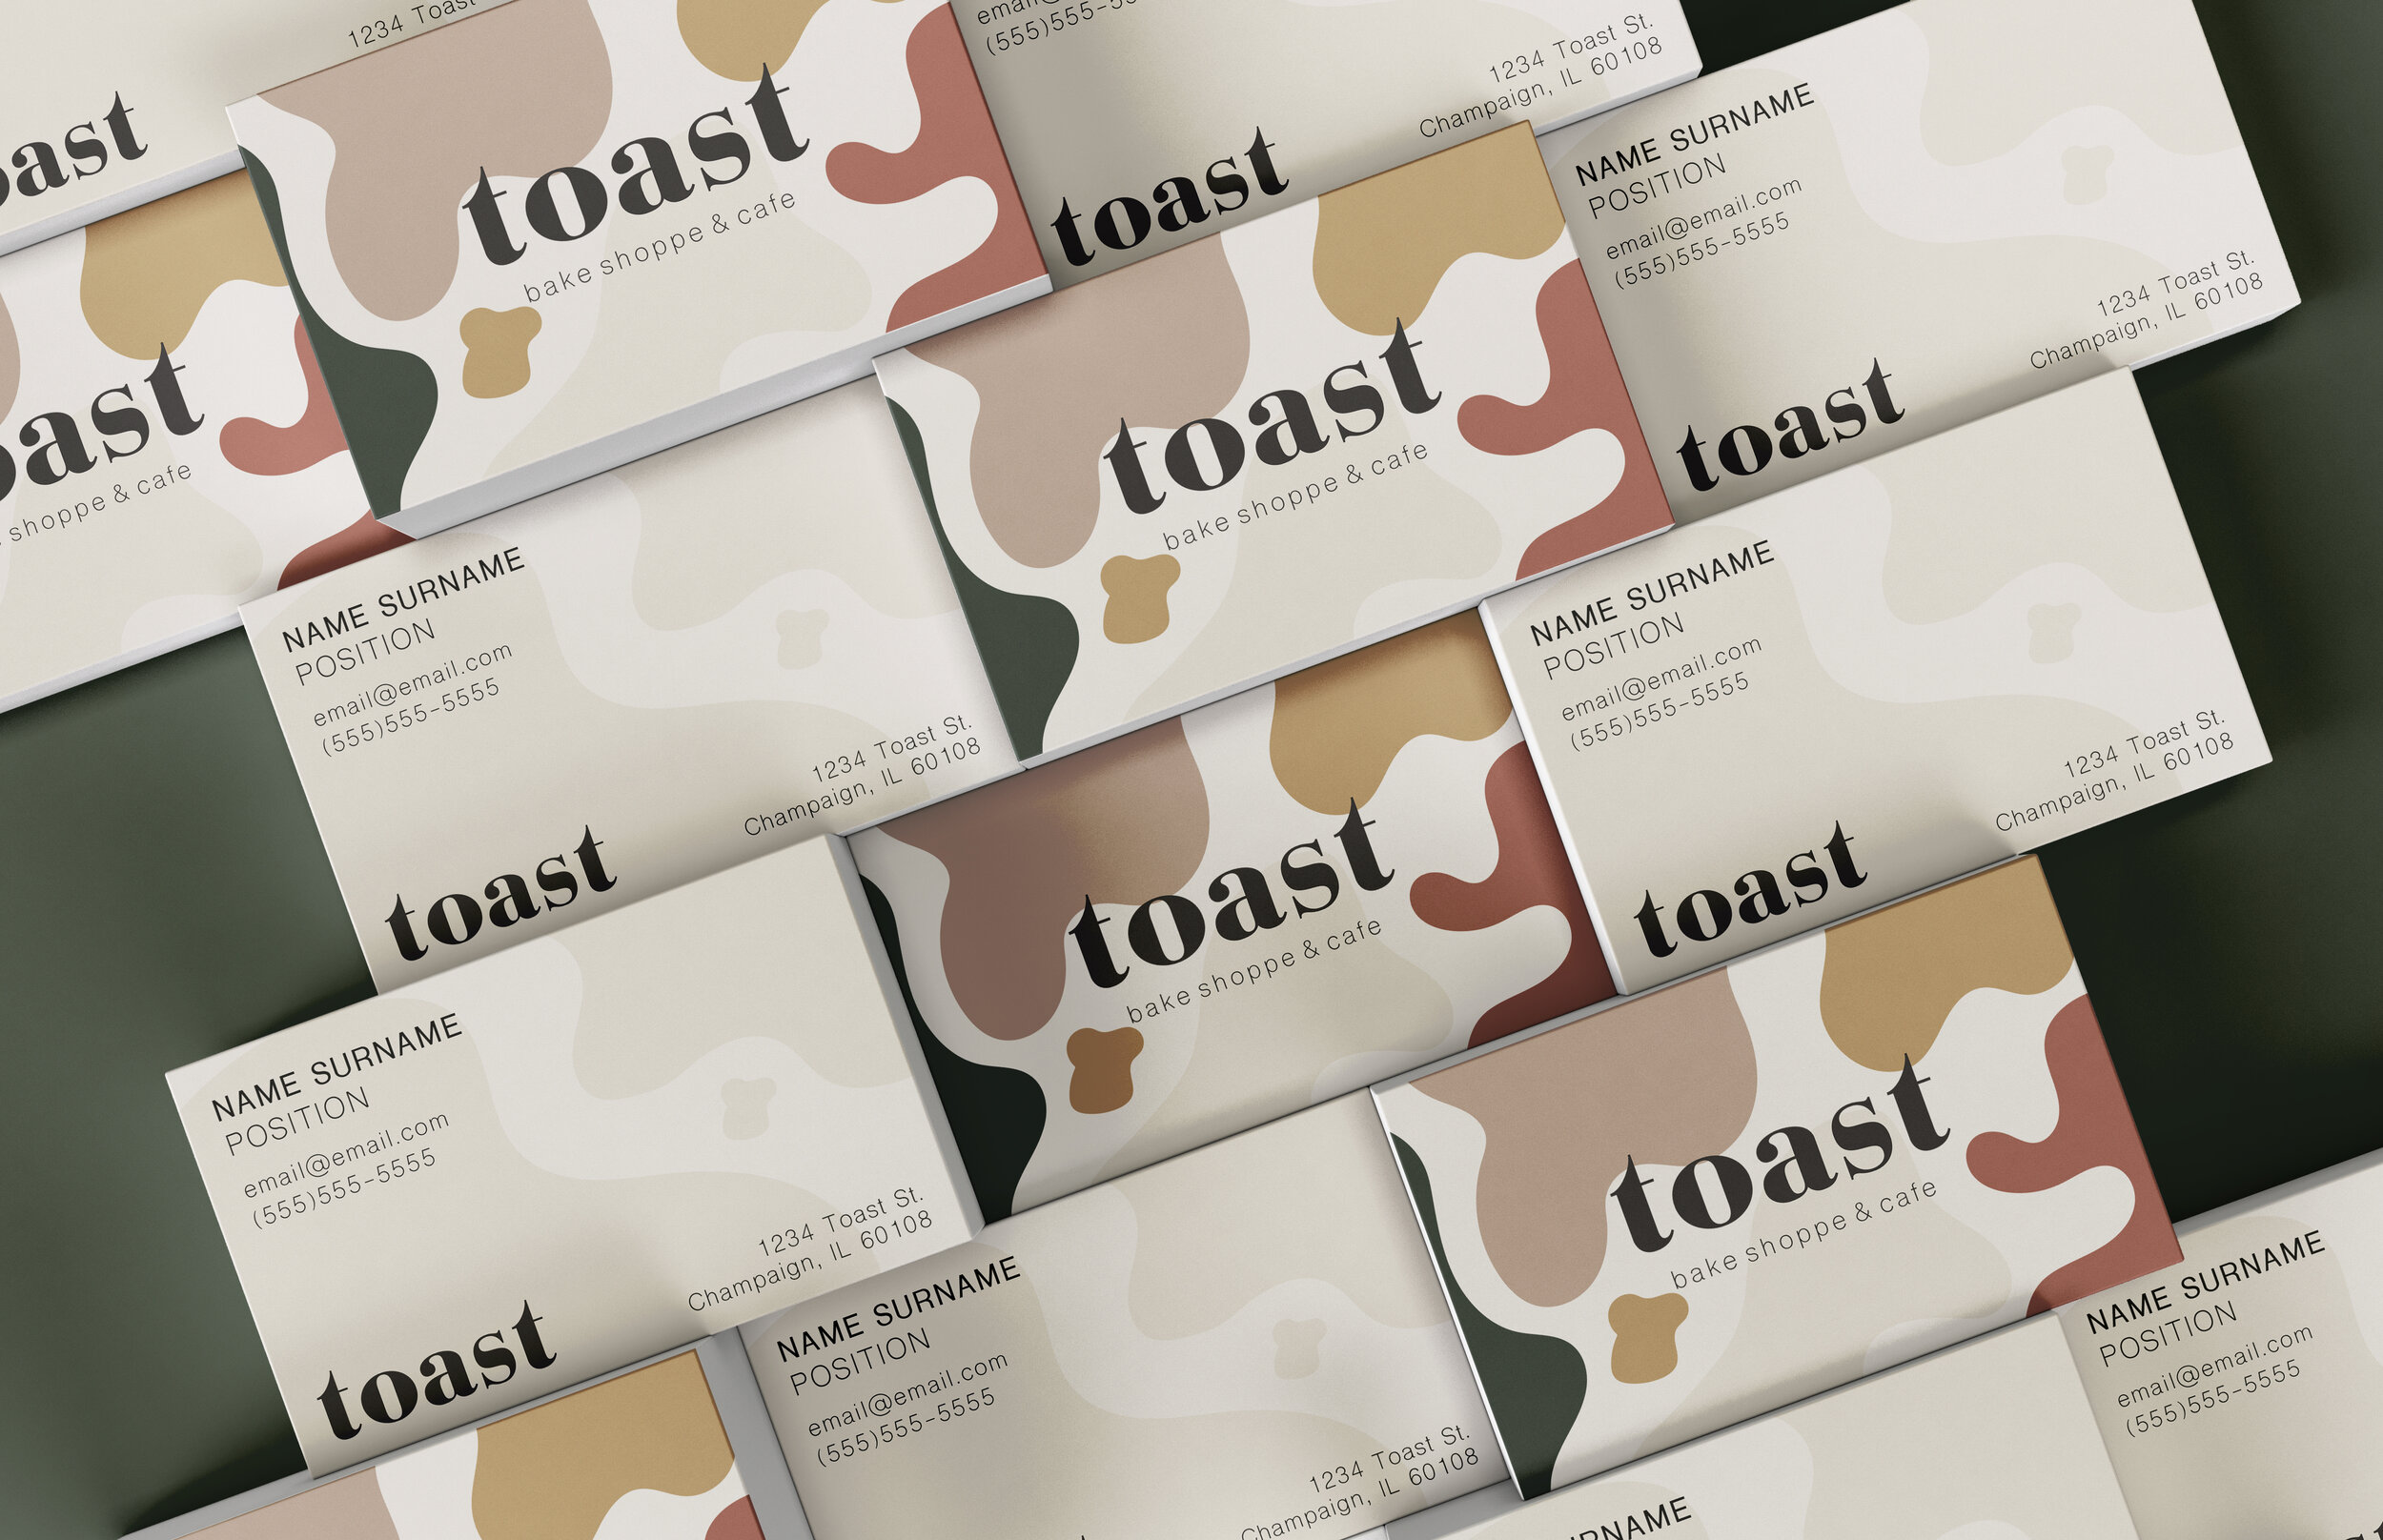 toast business cards.jpg